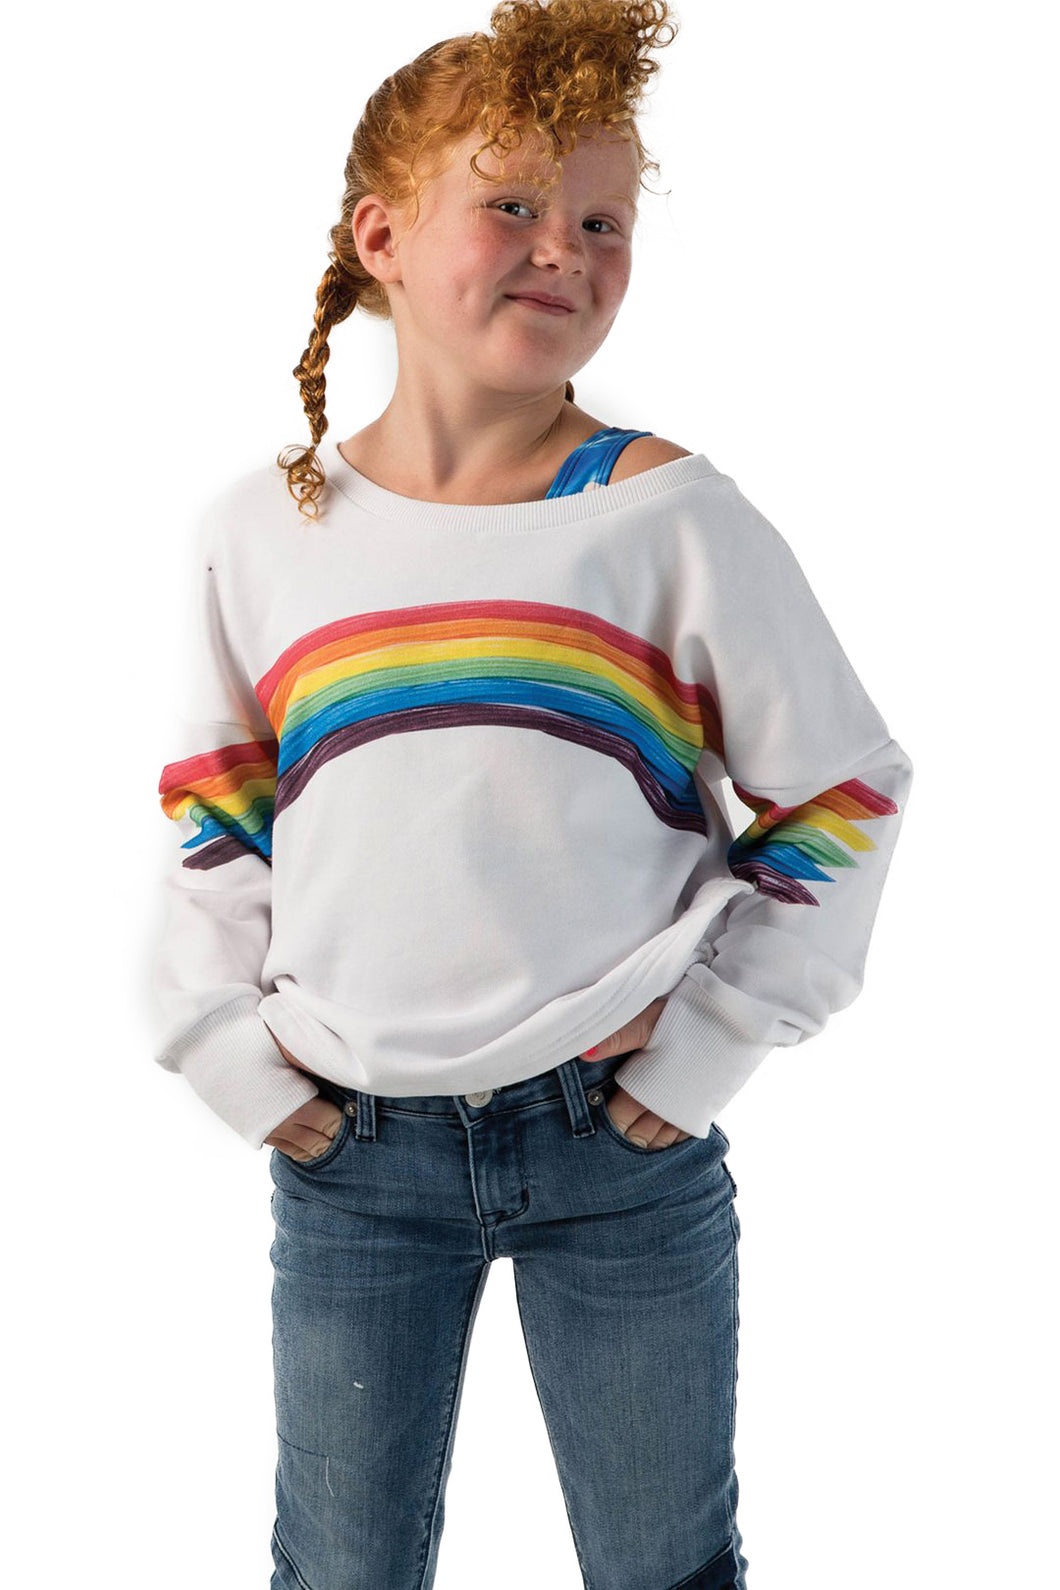 Rainbow Dreams Sweatshirt - Youth